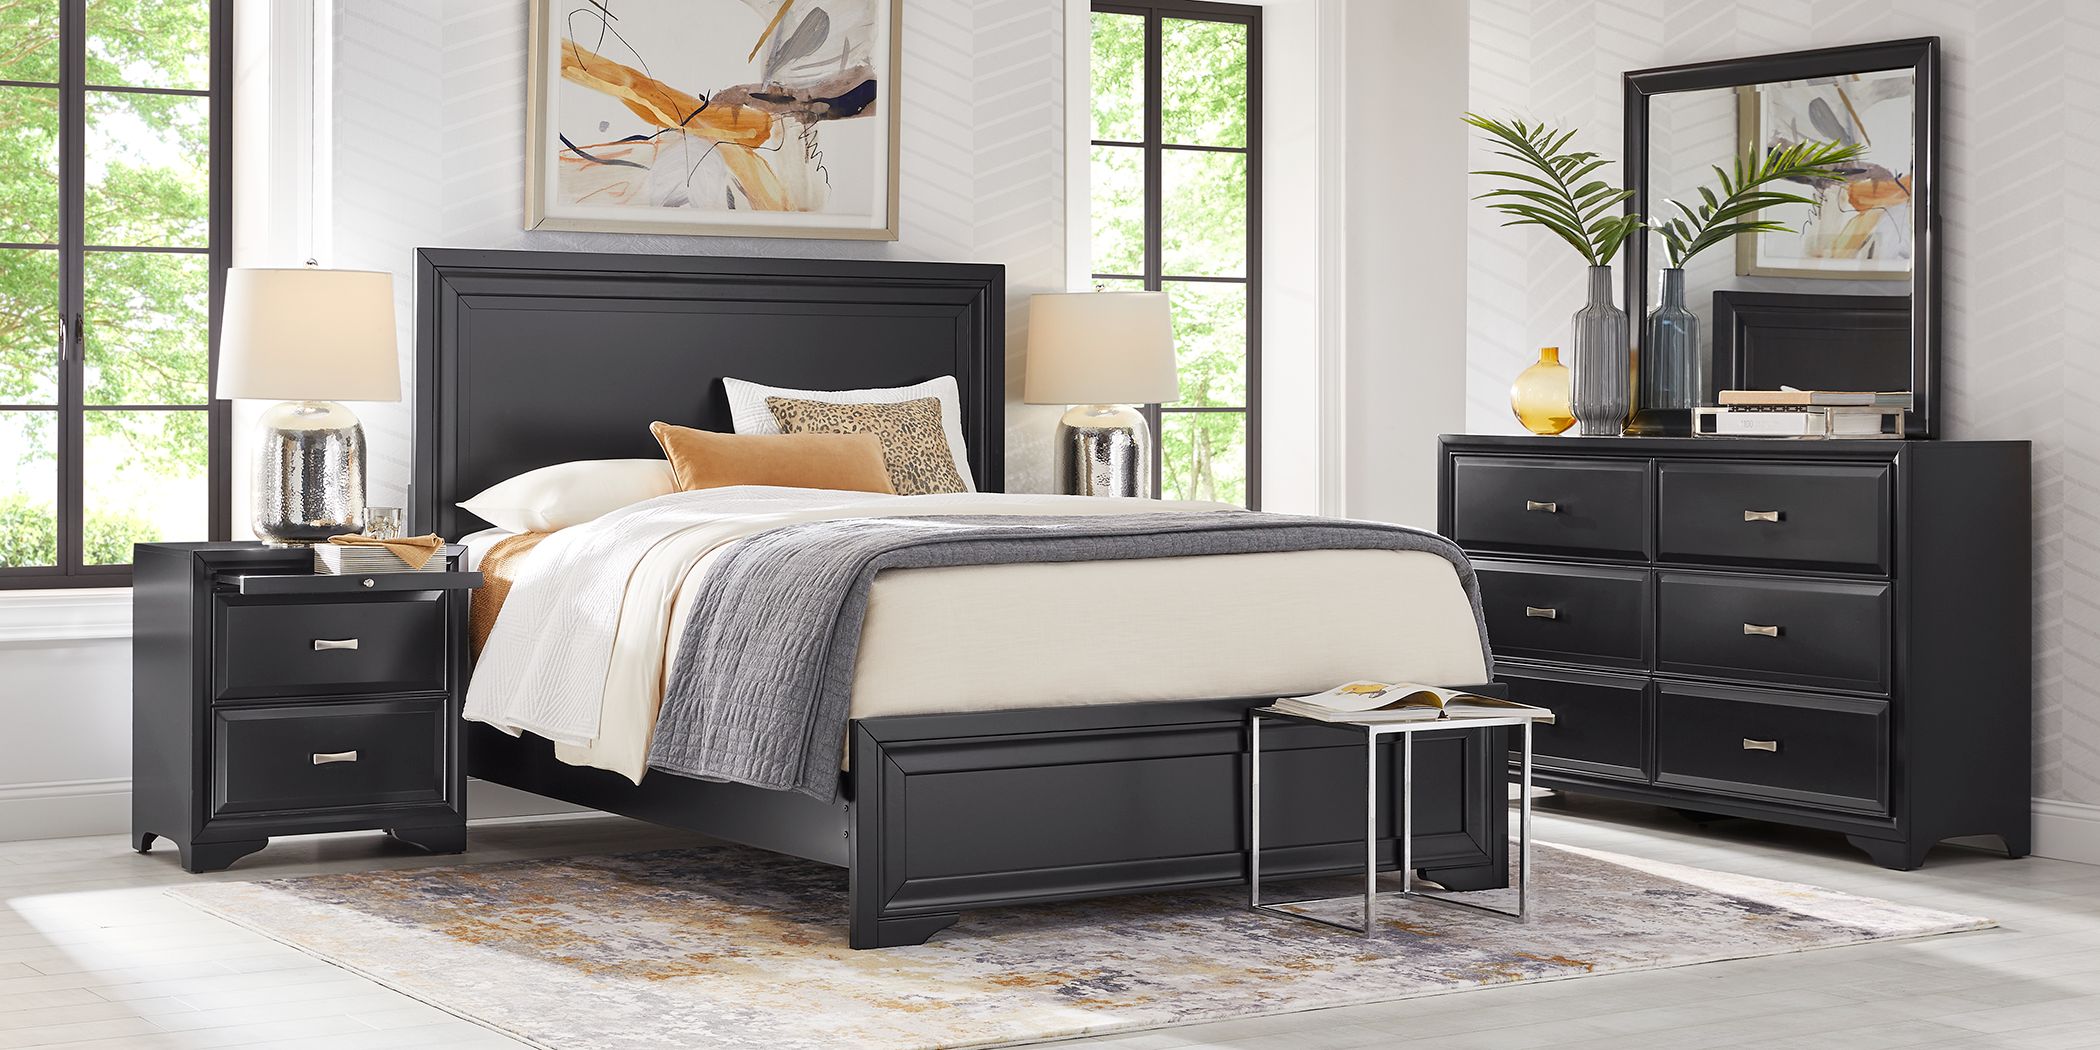 Bedroom Furniture Rooms To, Black Leather Bedroom Sets Queen